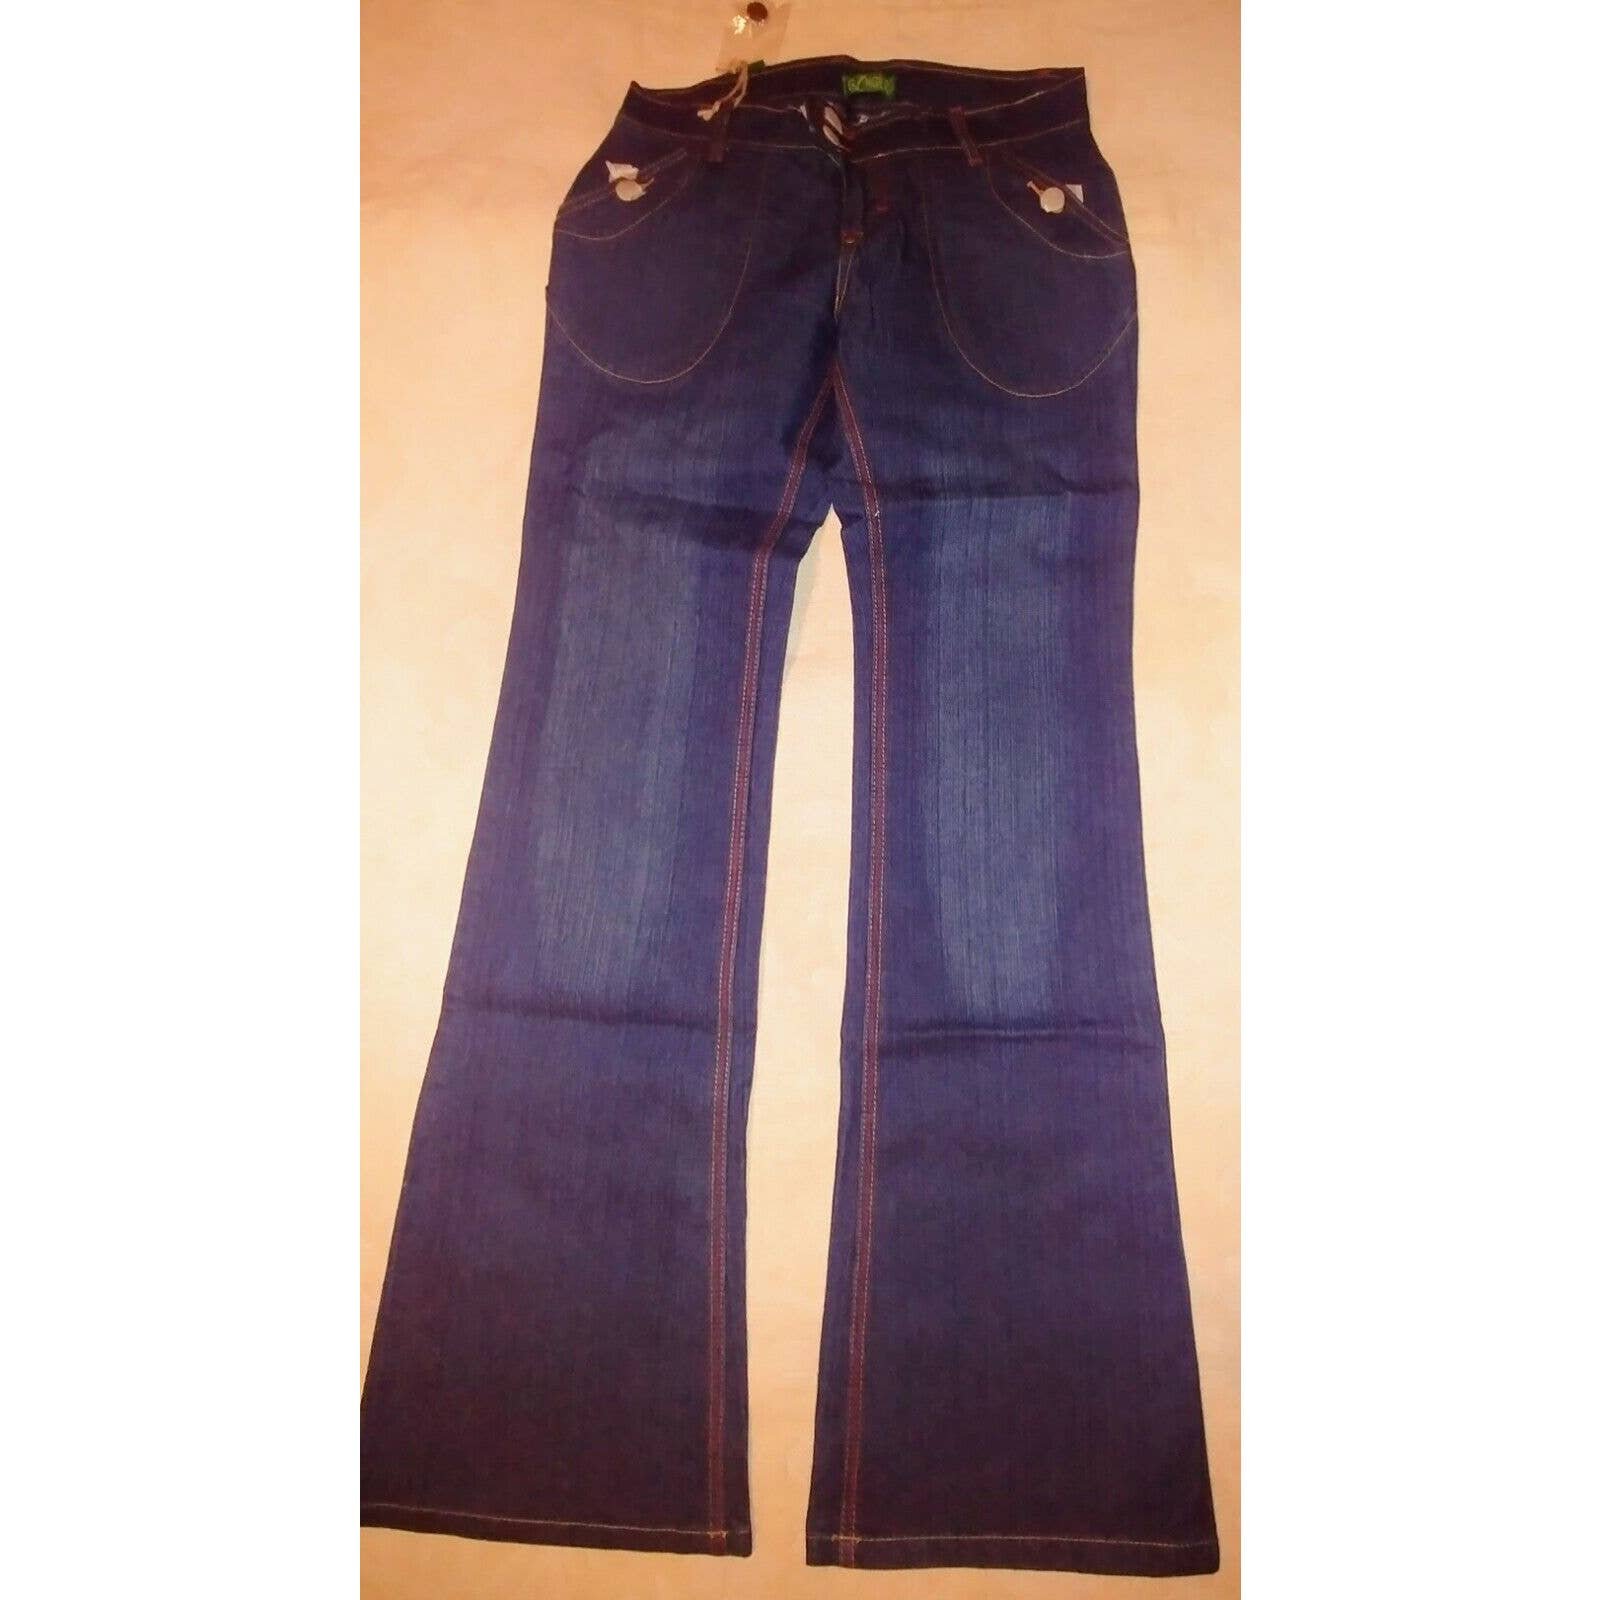 Cheap NWT G!nger wide leg jeans sz 7/8 (C21) GXmlsmGEY 